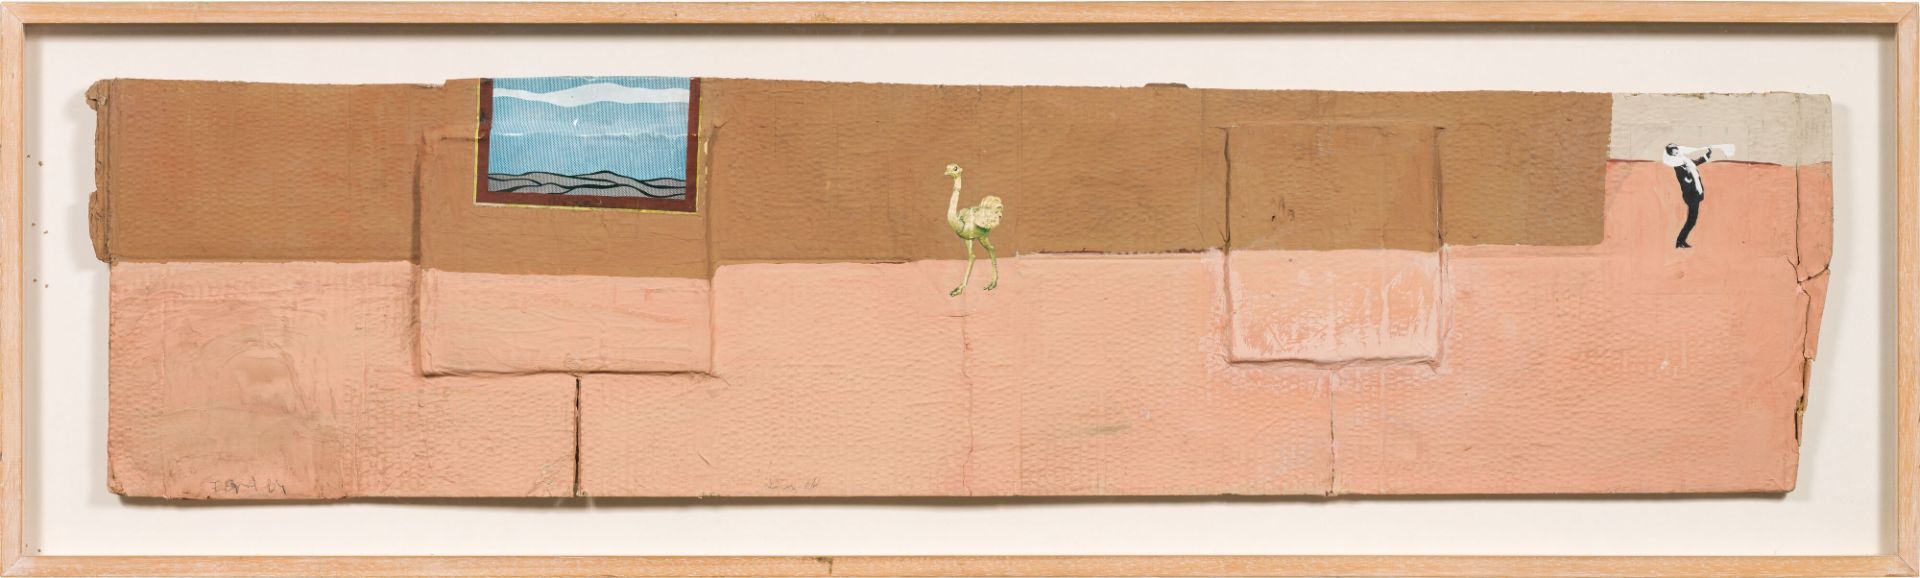 Franz WestUntitled1984mixed media, collage, tempera on cardboard; framed36 x 151 cm;50 x 166 cm ( - Image 2 of 3